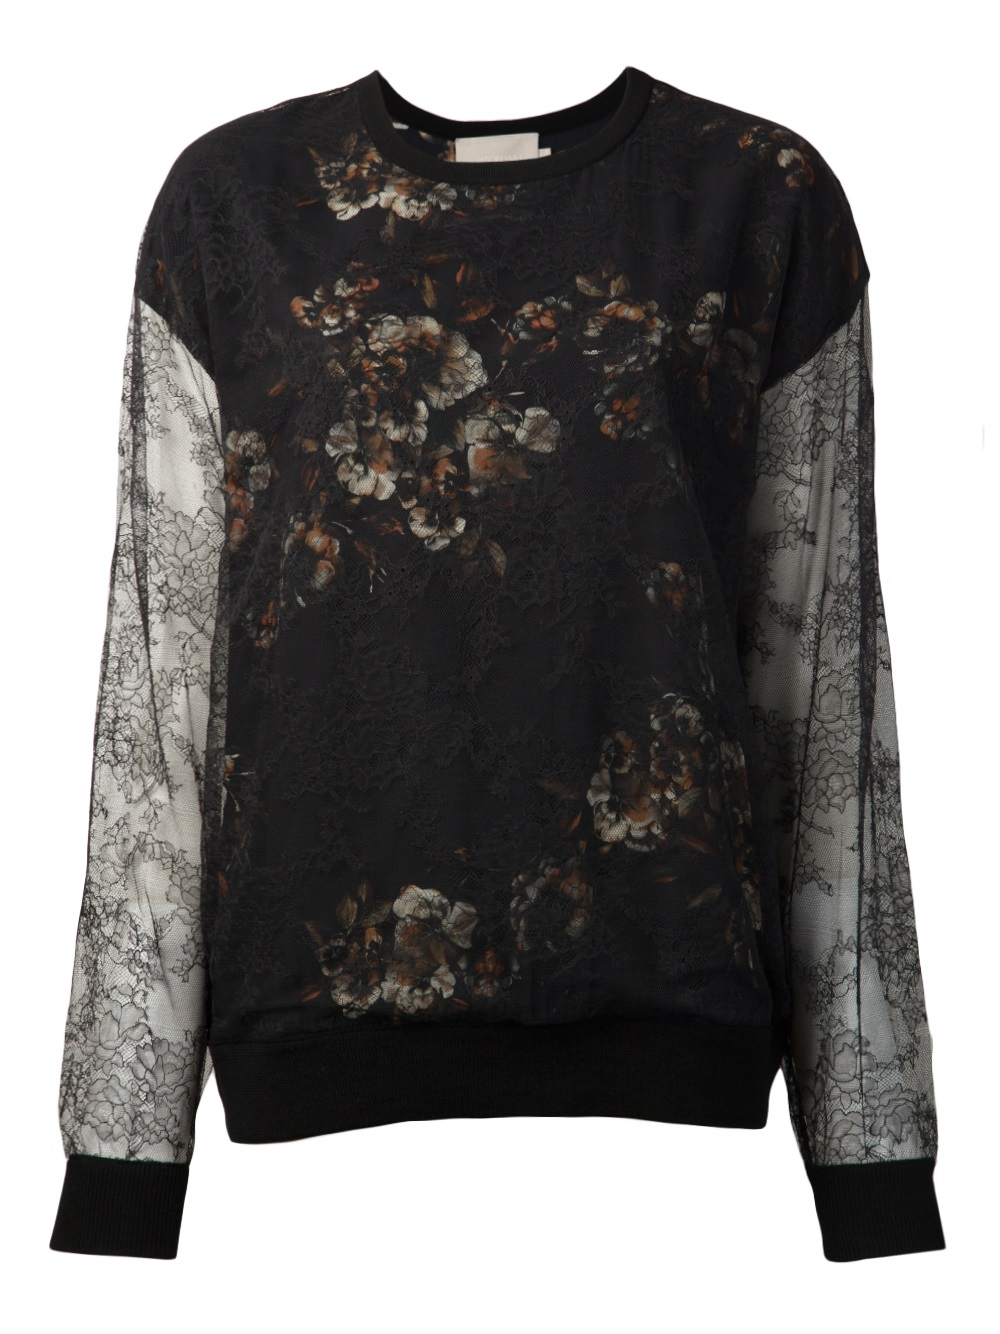 Jason Wu Lace Floral Sweatshirt in Black | Lyst